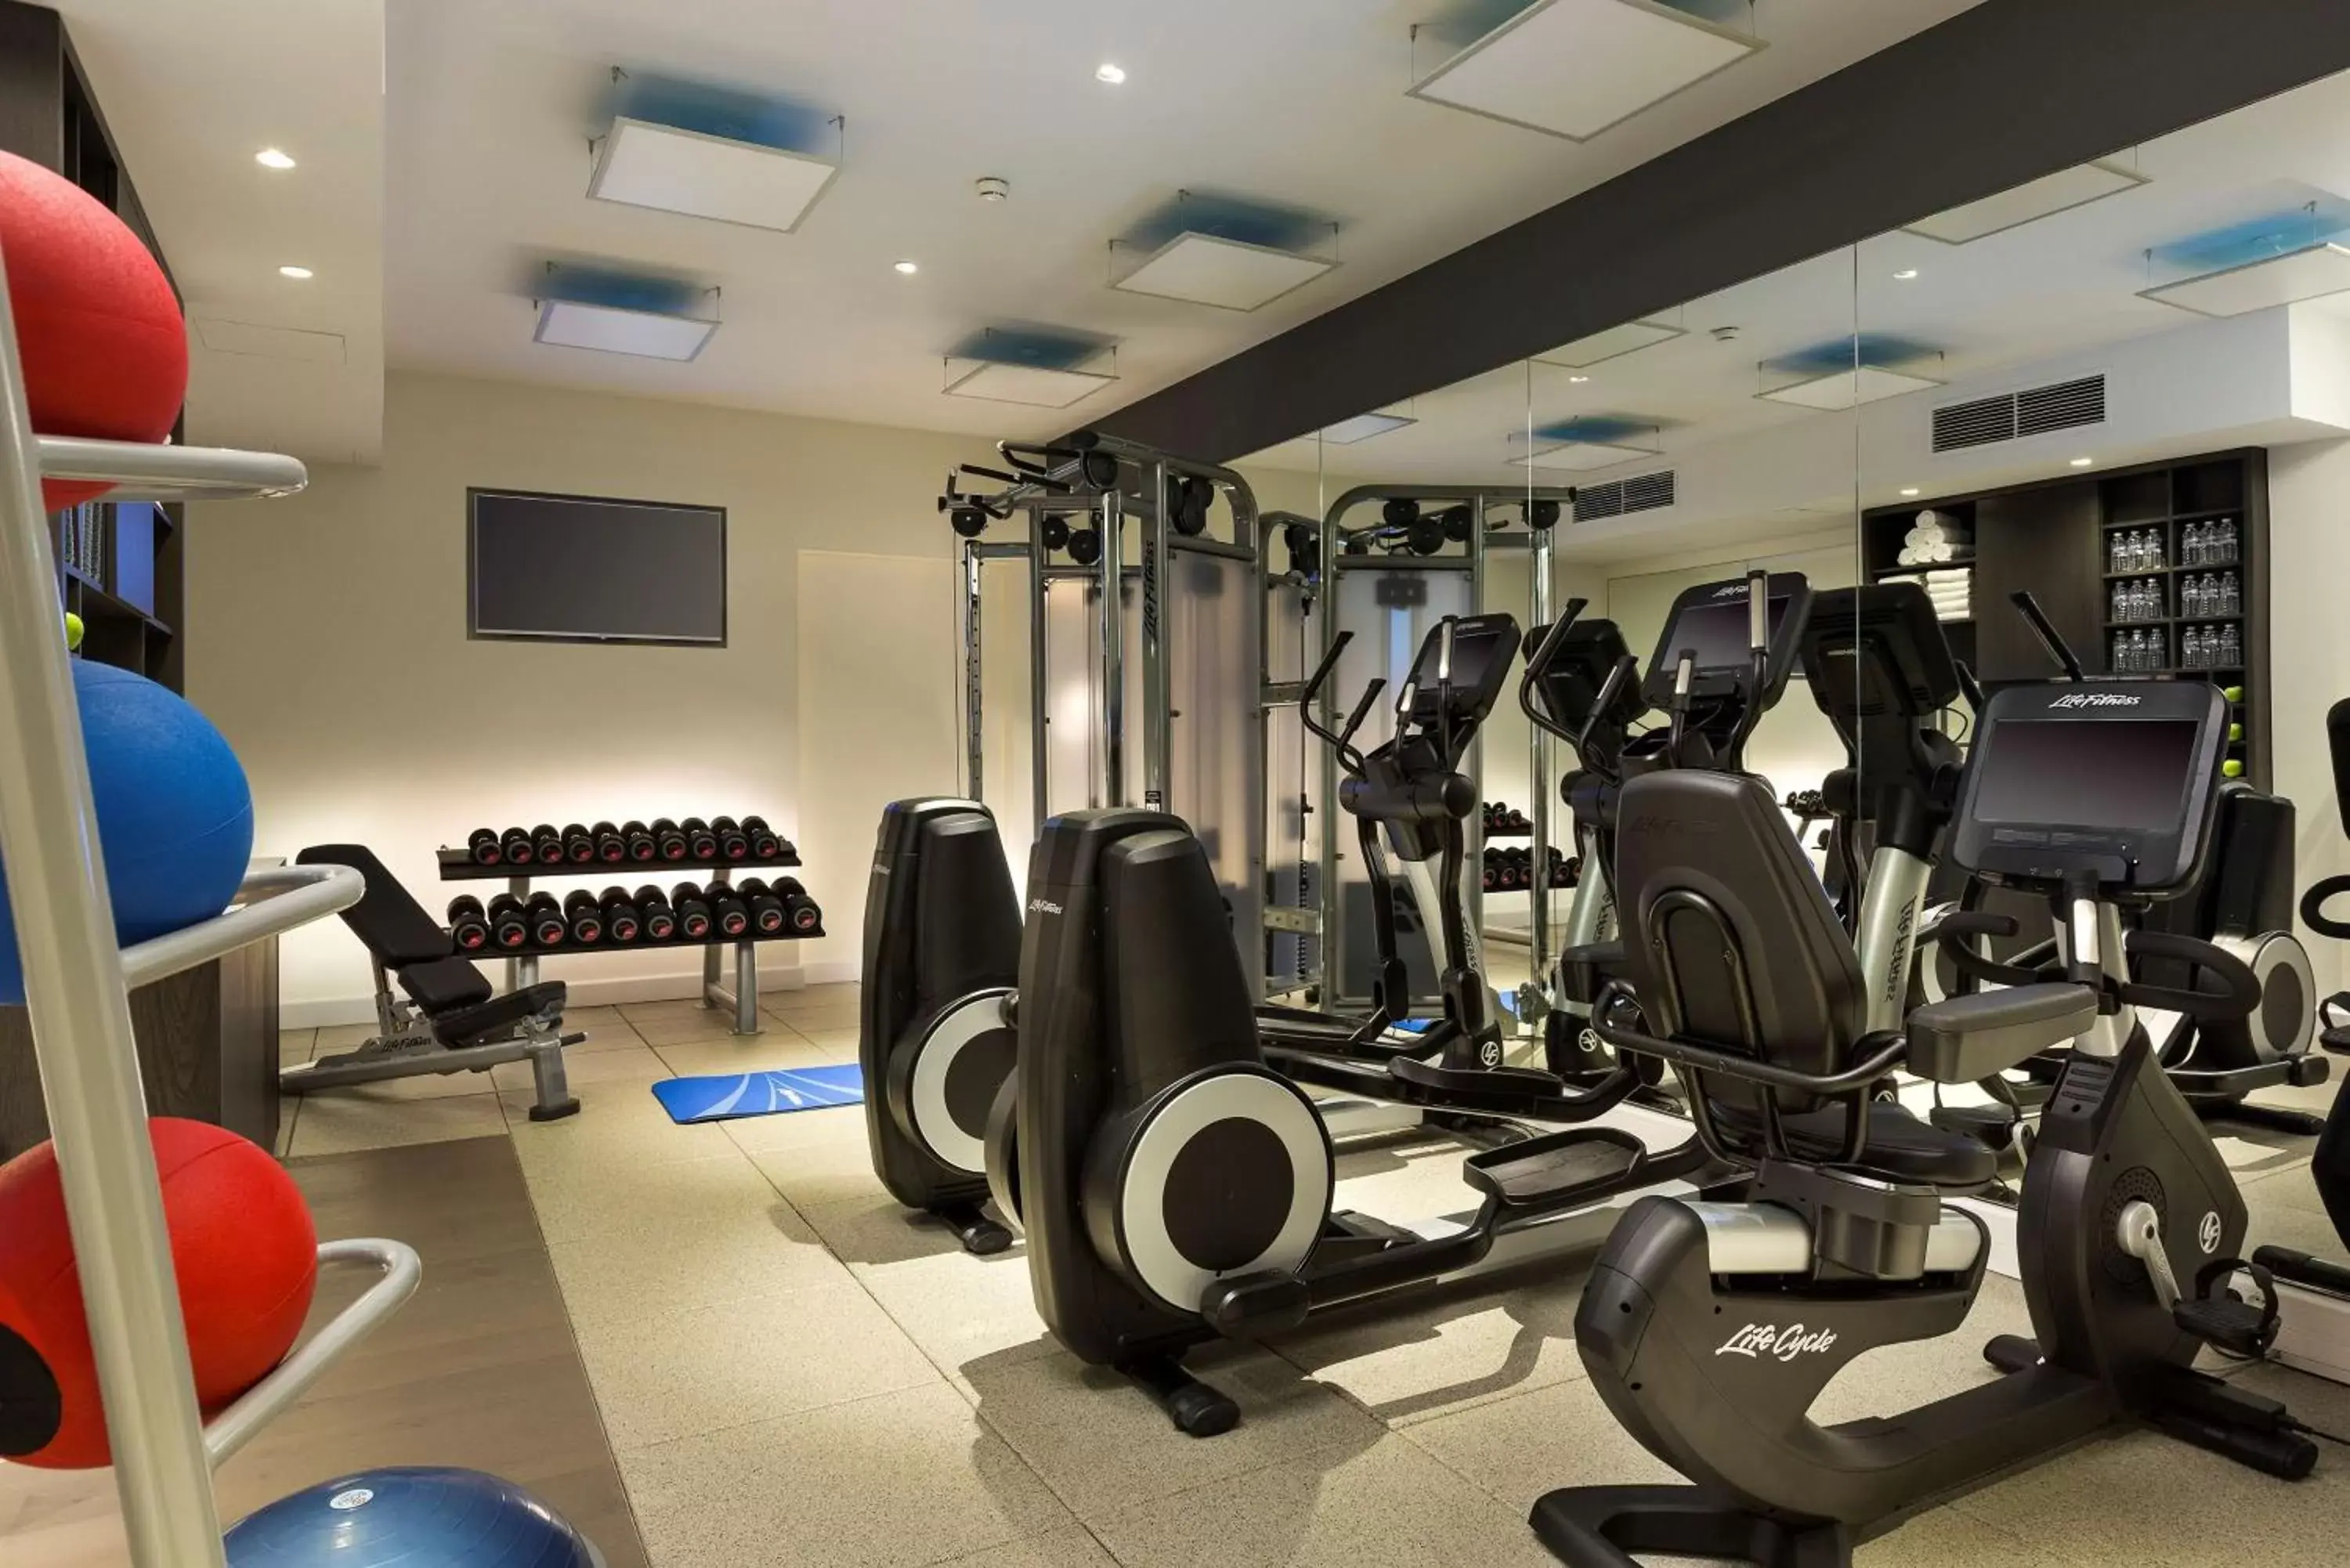 Fitness centre/facilities, Fitness Center/Facilities in Hilton Paris Opera